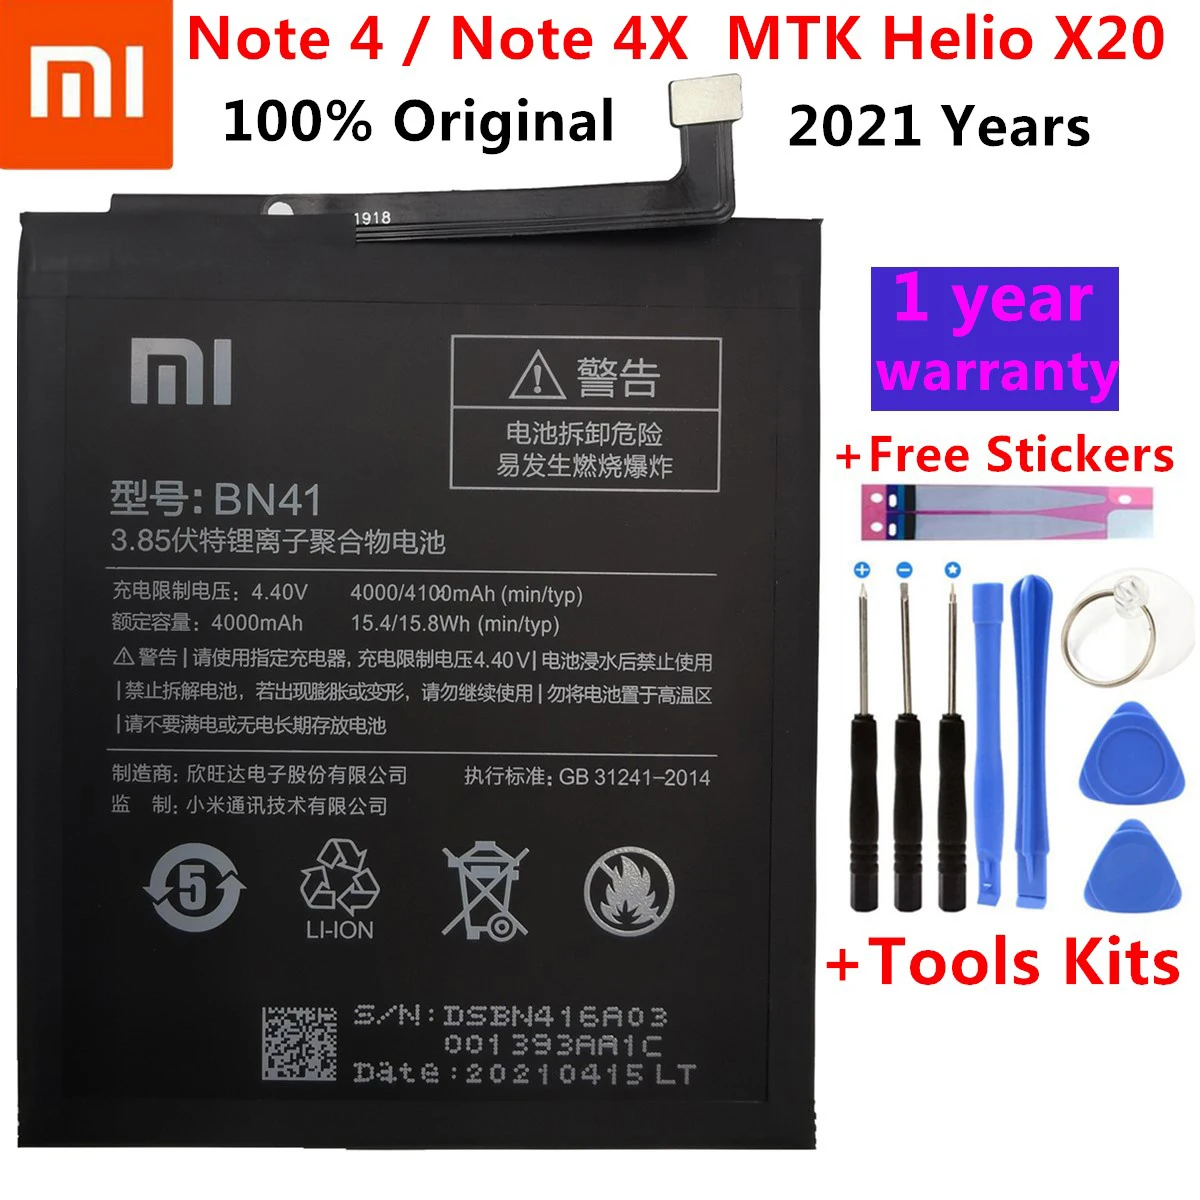 

Новинка 2021, 100% оригинальный аккумулятор BN41 на 4100 мАч для Xiaomi Redmi Note 4, MTK Helio X20 / Note 4X Pro, MTK Helio X20 + Бесплатные инструменты